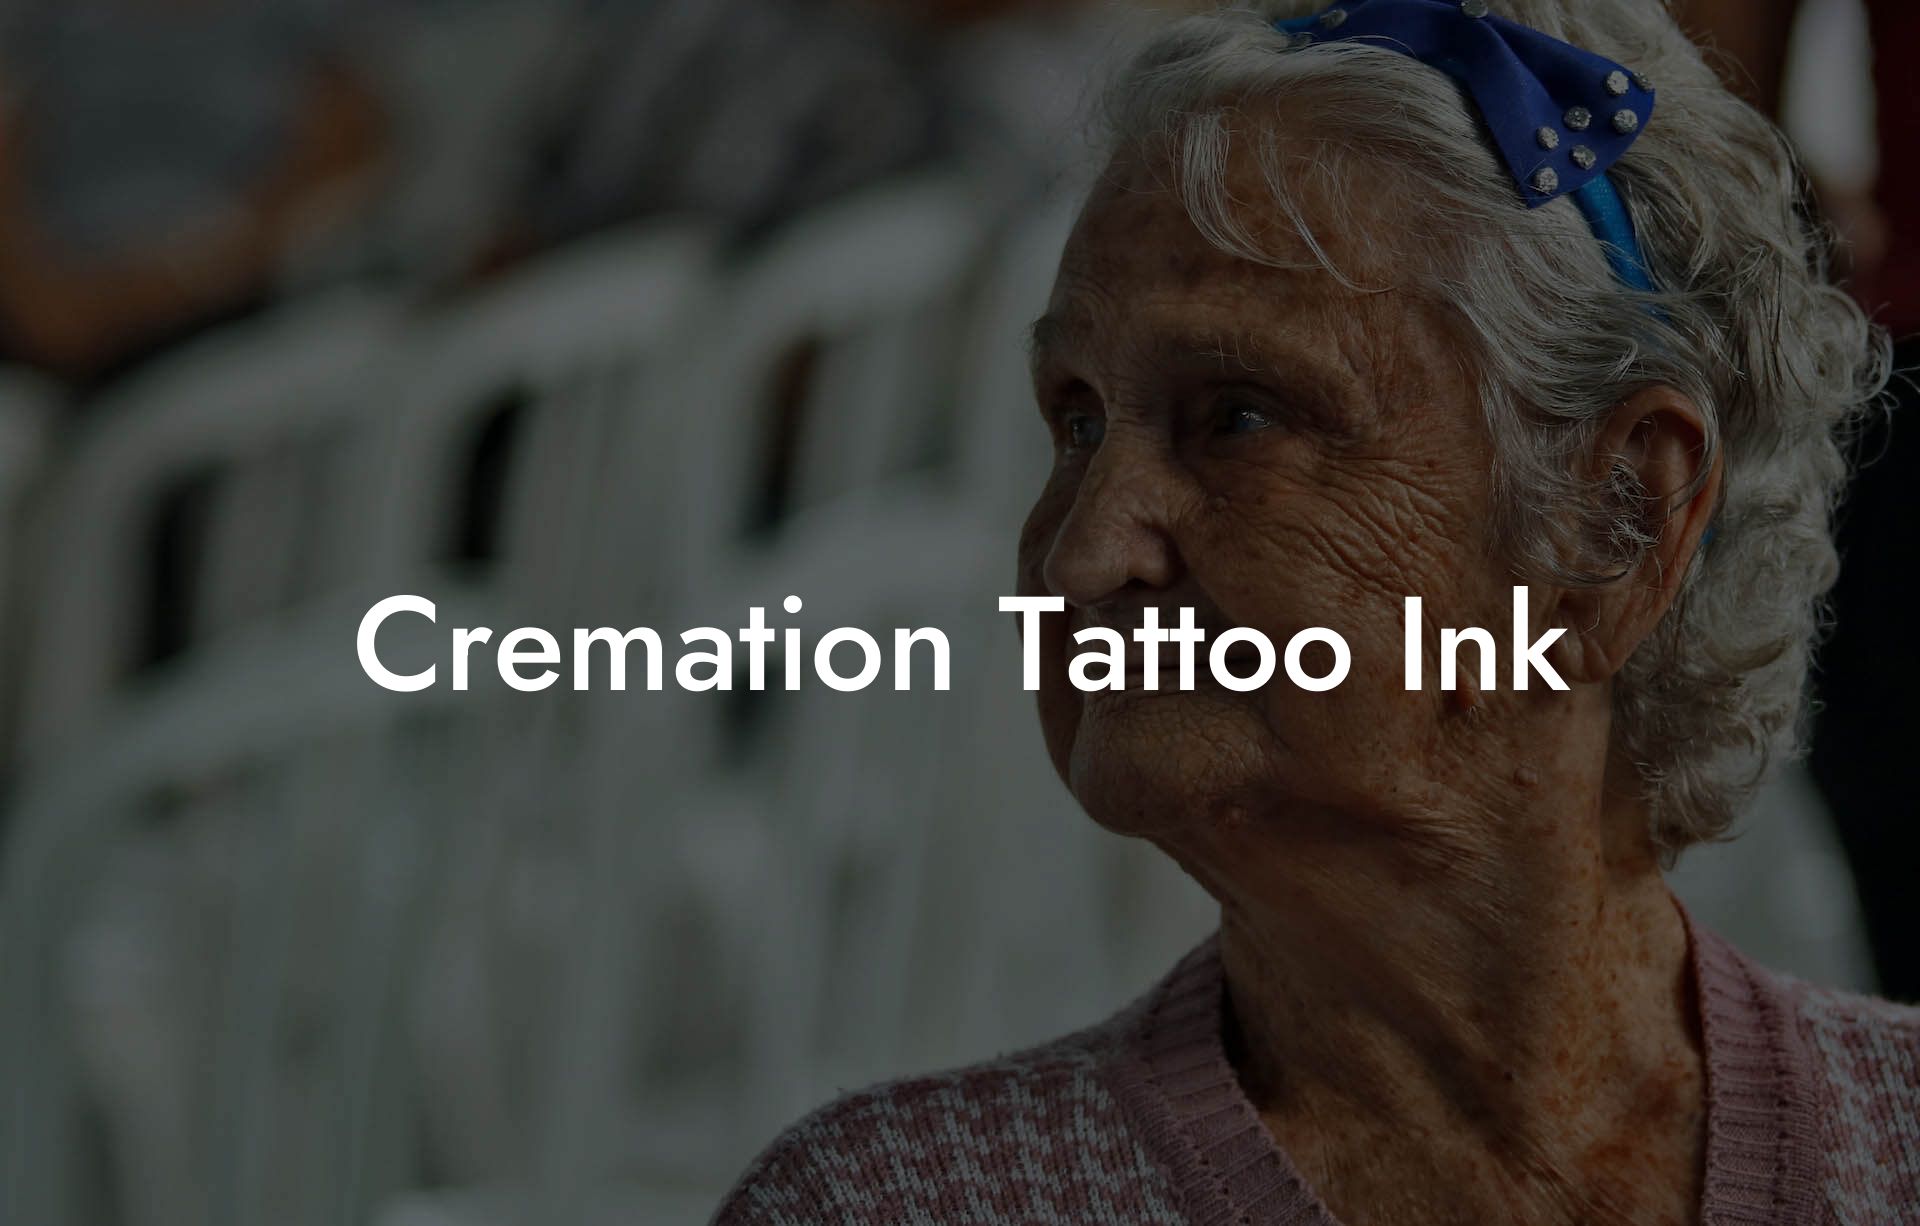 Cremation Tattoo Ink